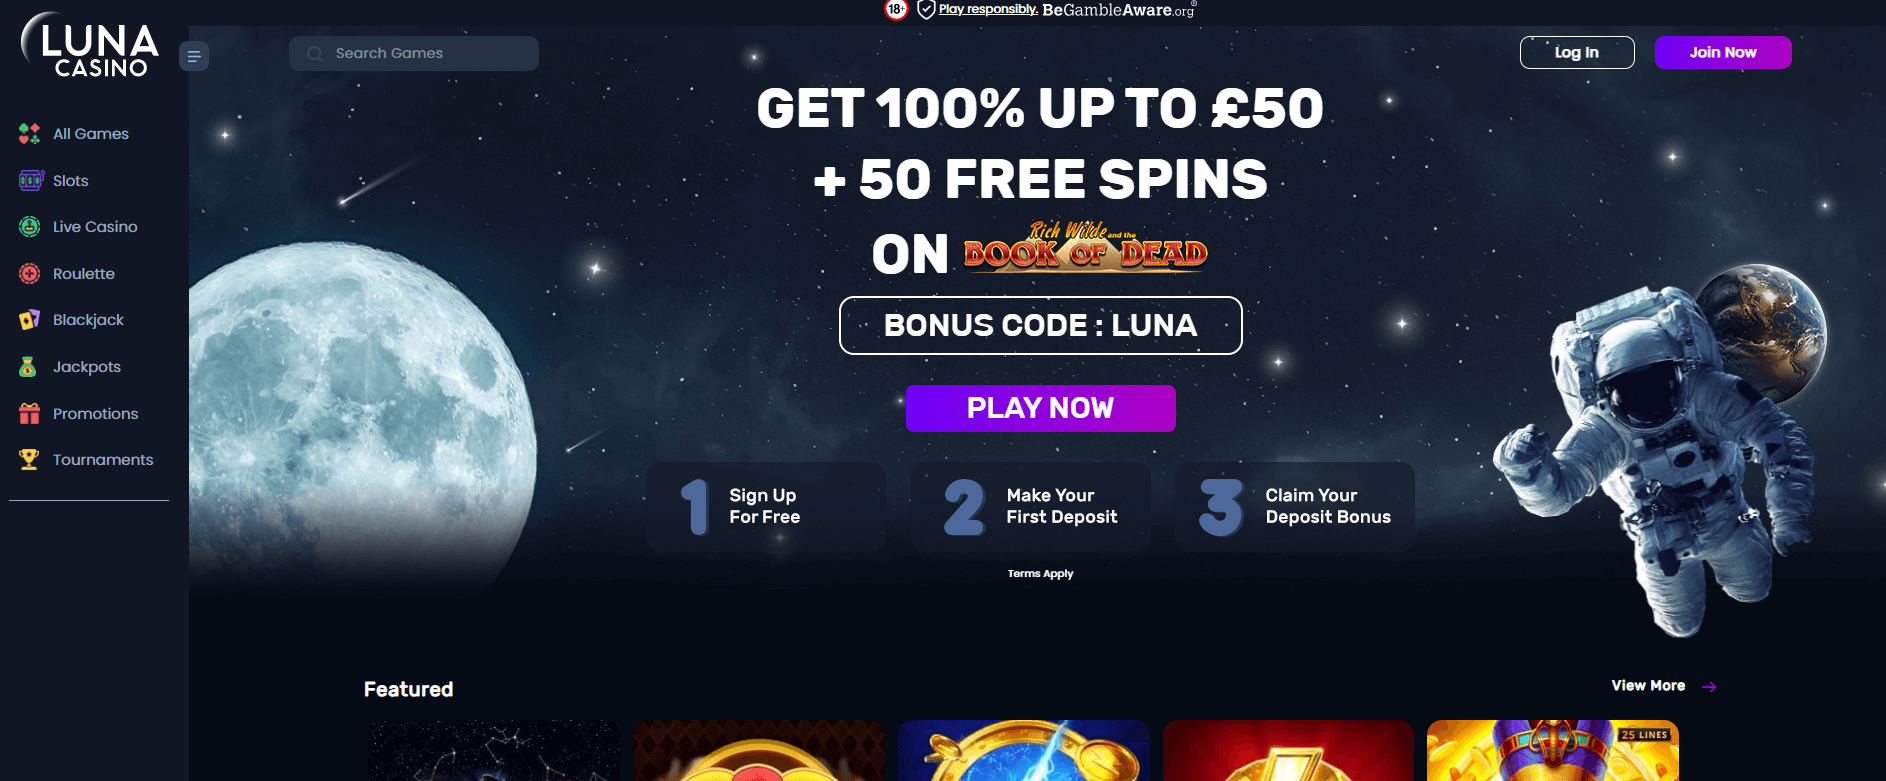 luna casino website